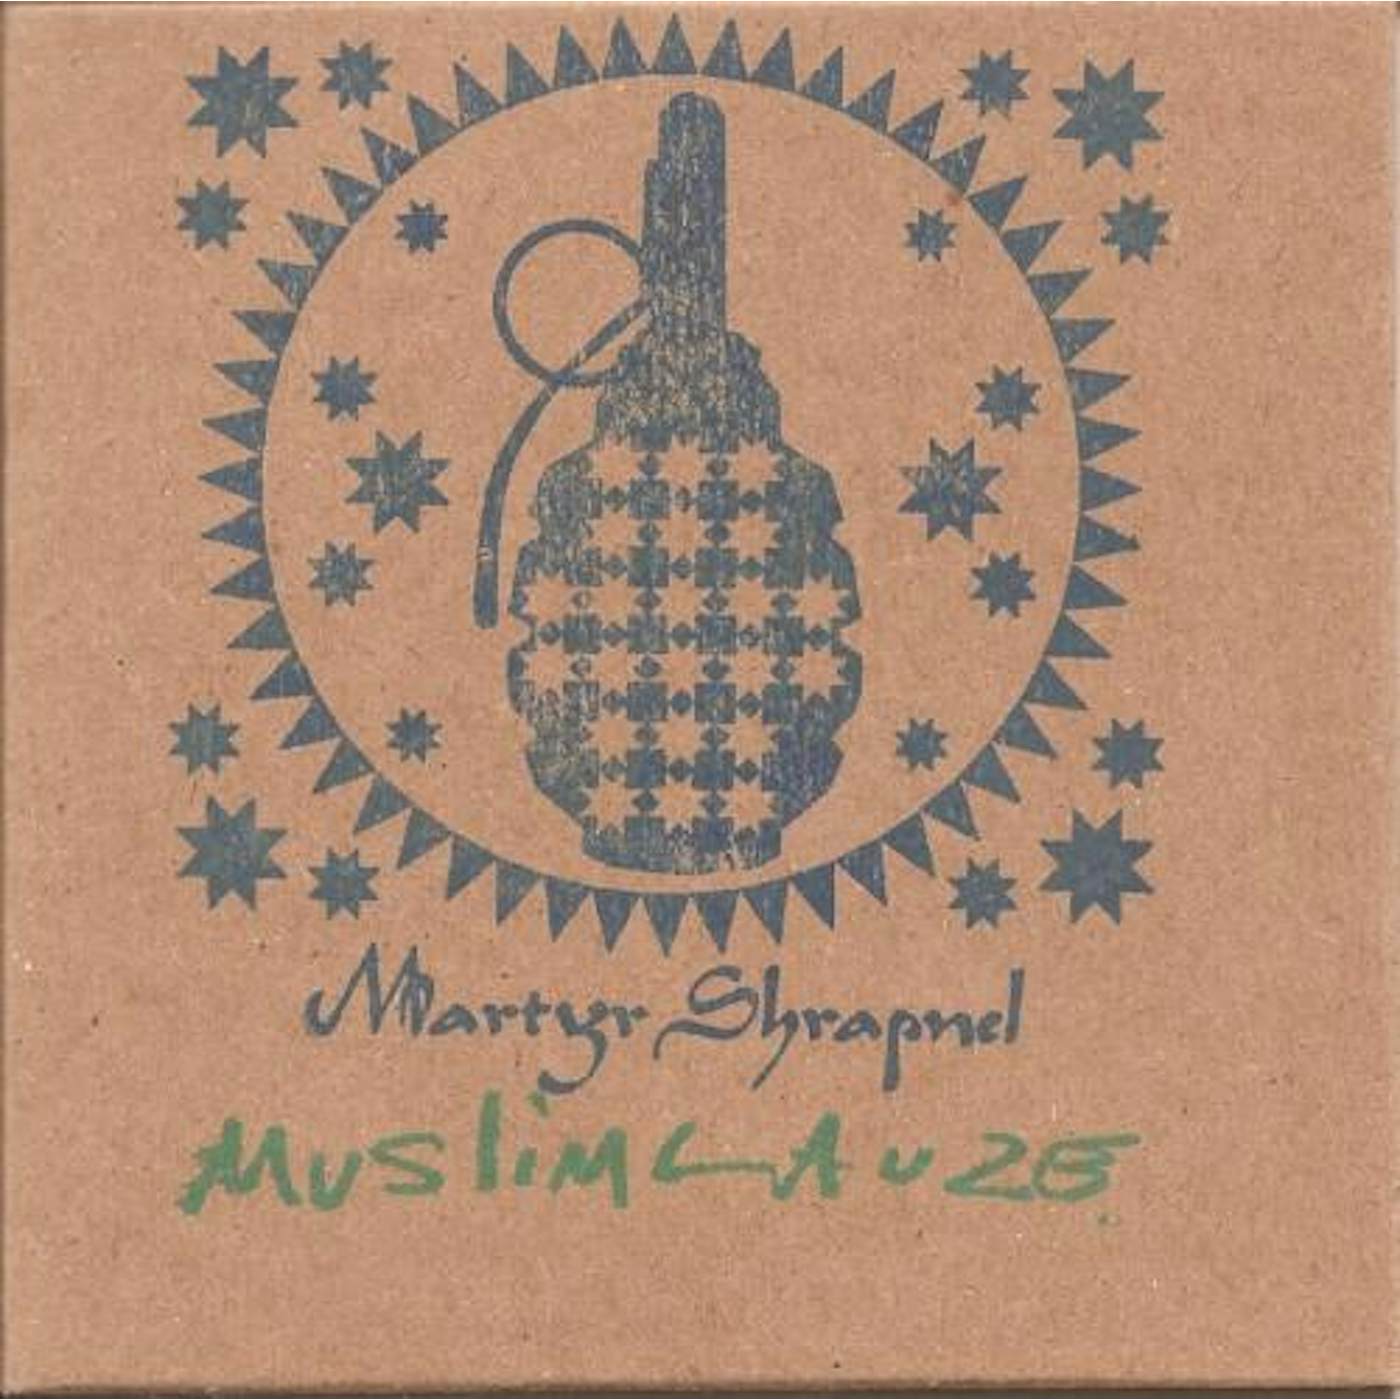 Muslimgauze MARTYR SHRAPNEL CD